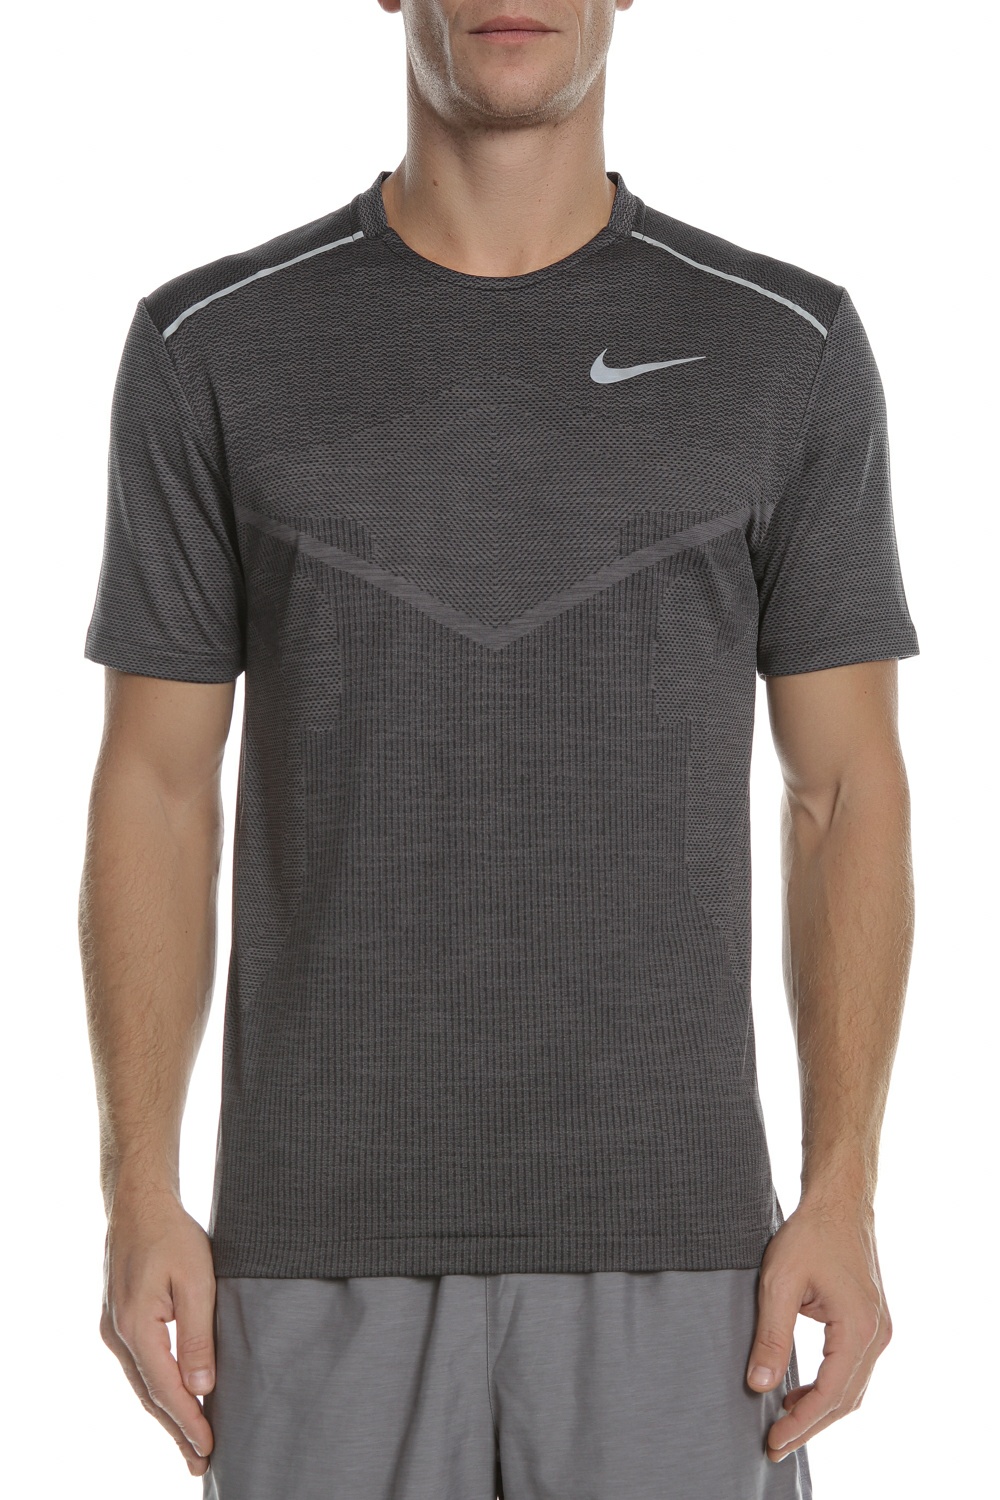 NIKE - Ανδρική κοντομάνικη μπλούζα Nike TechKnit Ultra μαύρη-γκρι Ανδρικά/Ρούχα/Αθλητικά/T-shirt